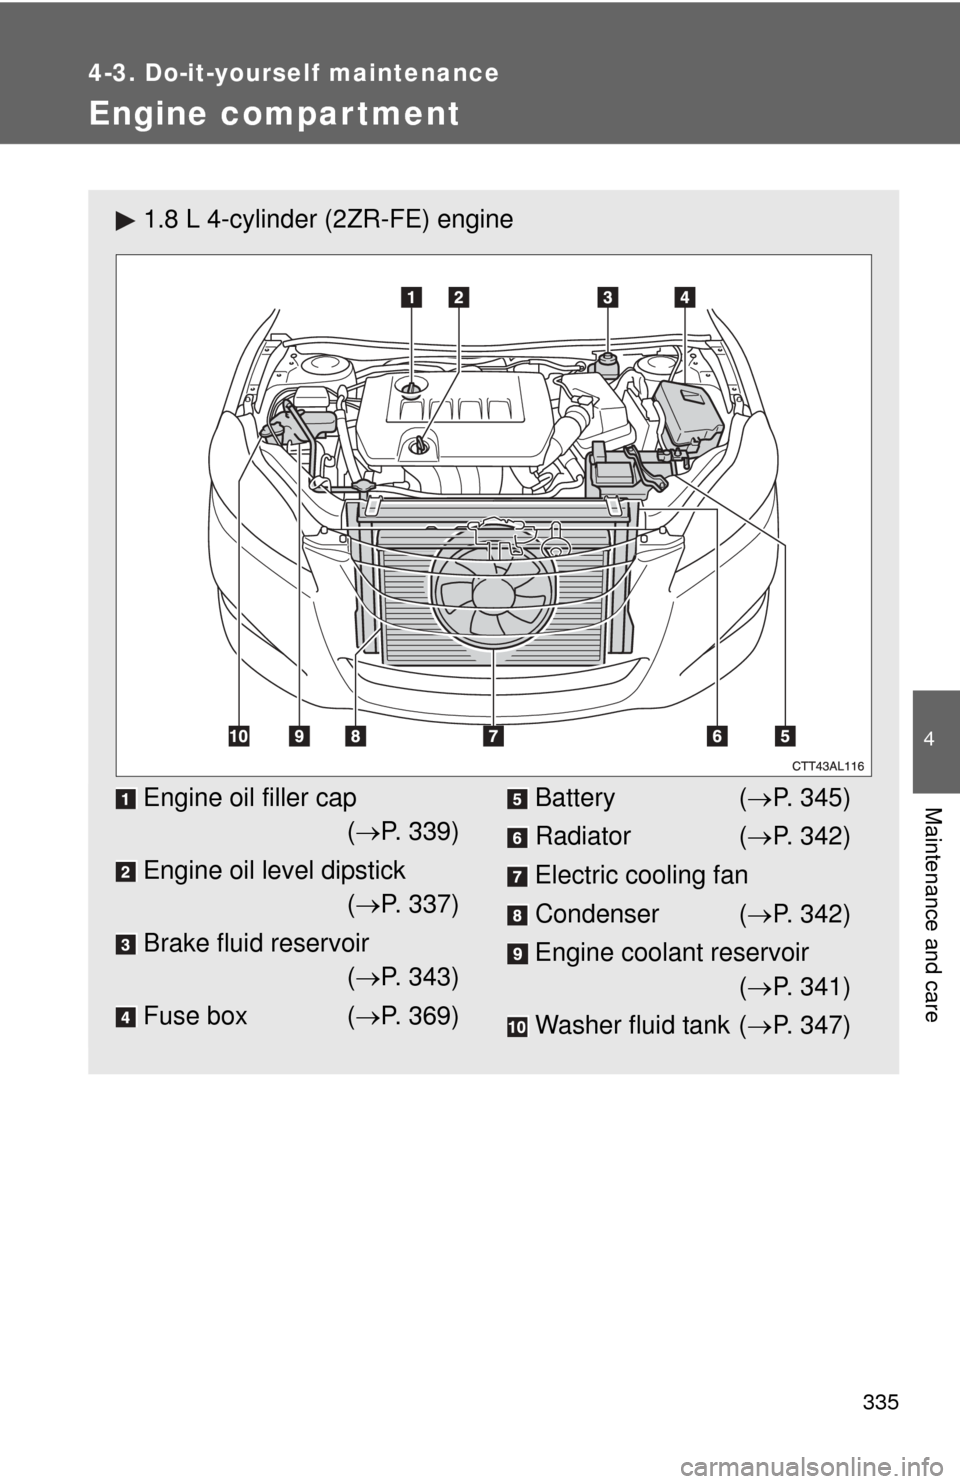 TOYOTA MATRIX 2014 E140 / 2.G Owners Manual 335
4-3. Do-it-yourself maintenance
4
Maintenance and care
Engine compar tment
1.8 L 4-cylinder (2ZR-FE) engine
Engine oil filler cap( P. 339)
Engine oil level dipstick ( P. 337)
Brake fluid res